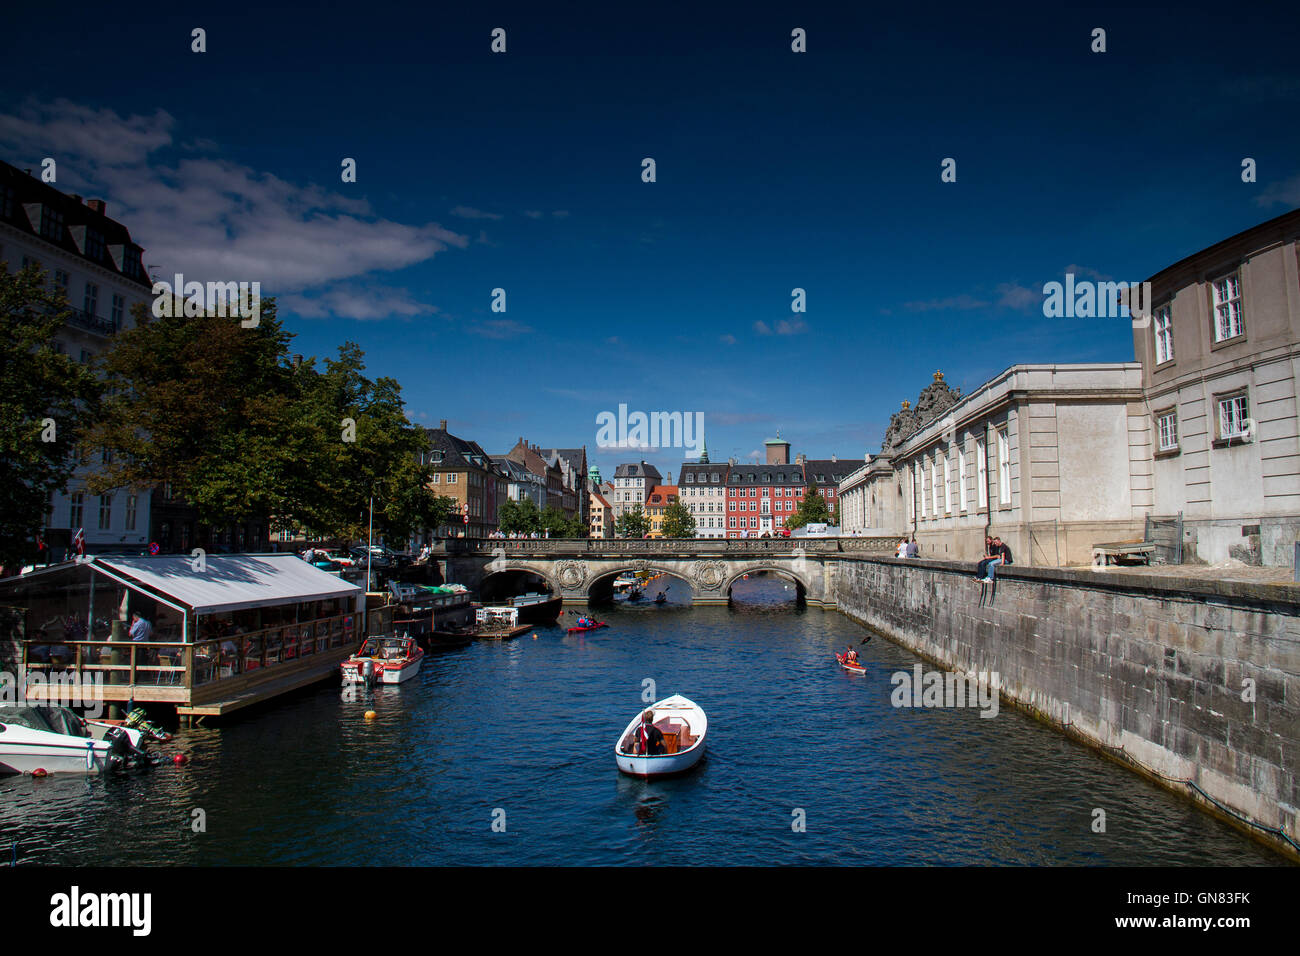 Boat on the Frederiksholms canal, in Copenhagen, Denmark Stock Photo